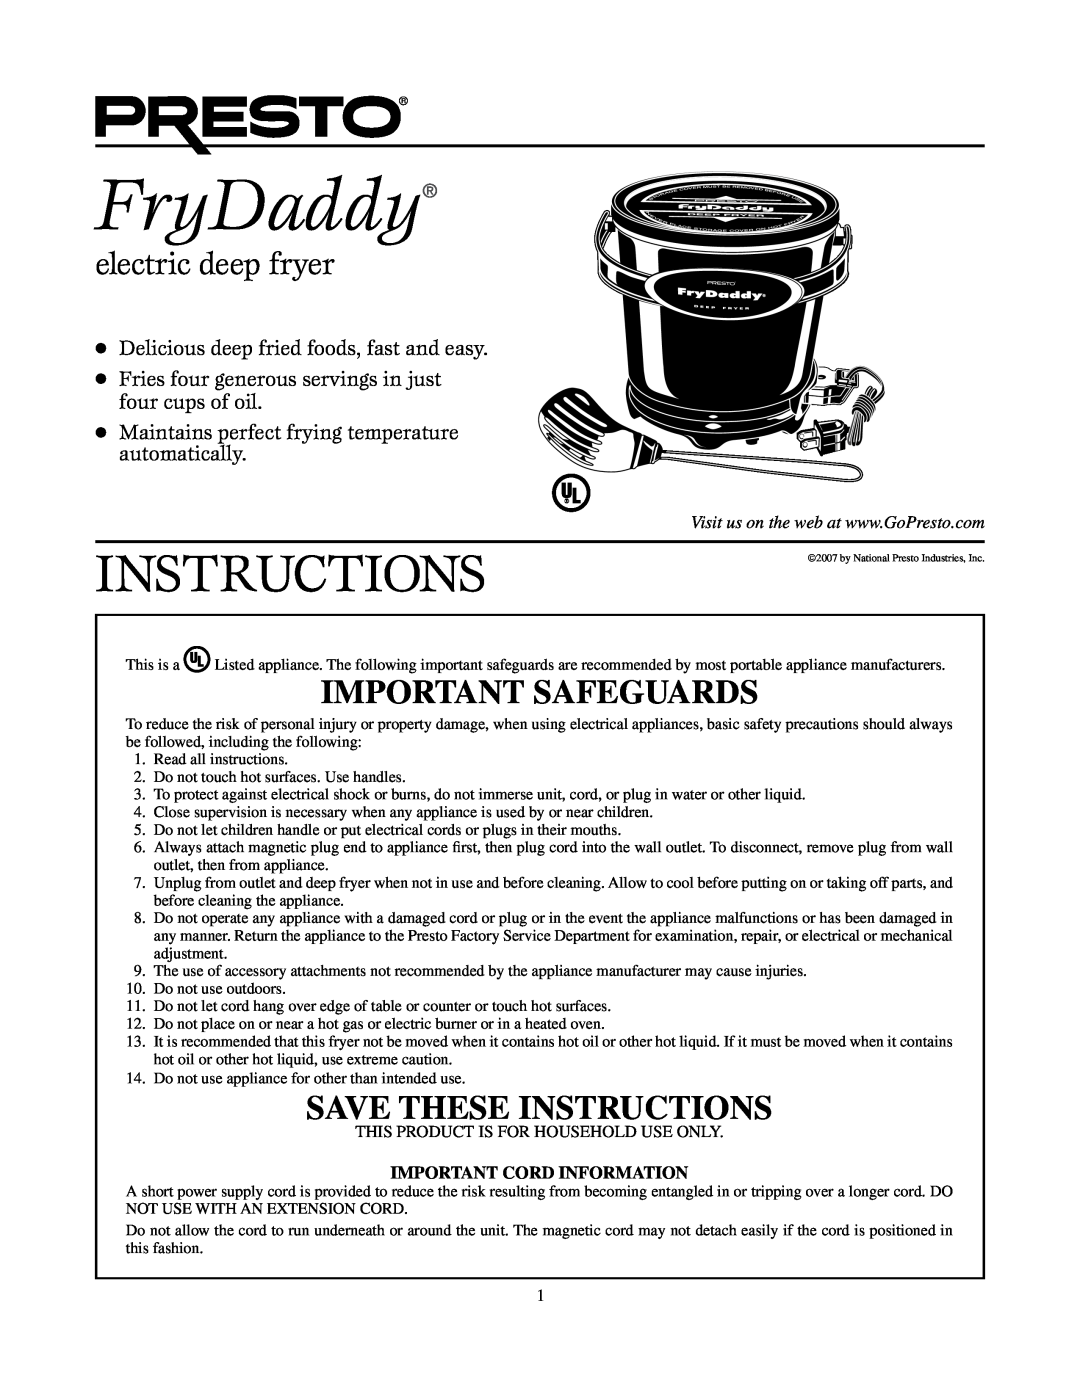 Presto Deep Fryer manual FryDaddy, Important Safeguards, Save These Instructions, electric deep fryer 